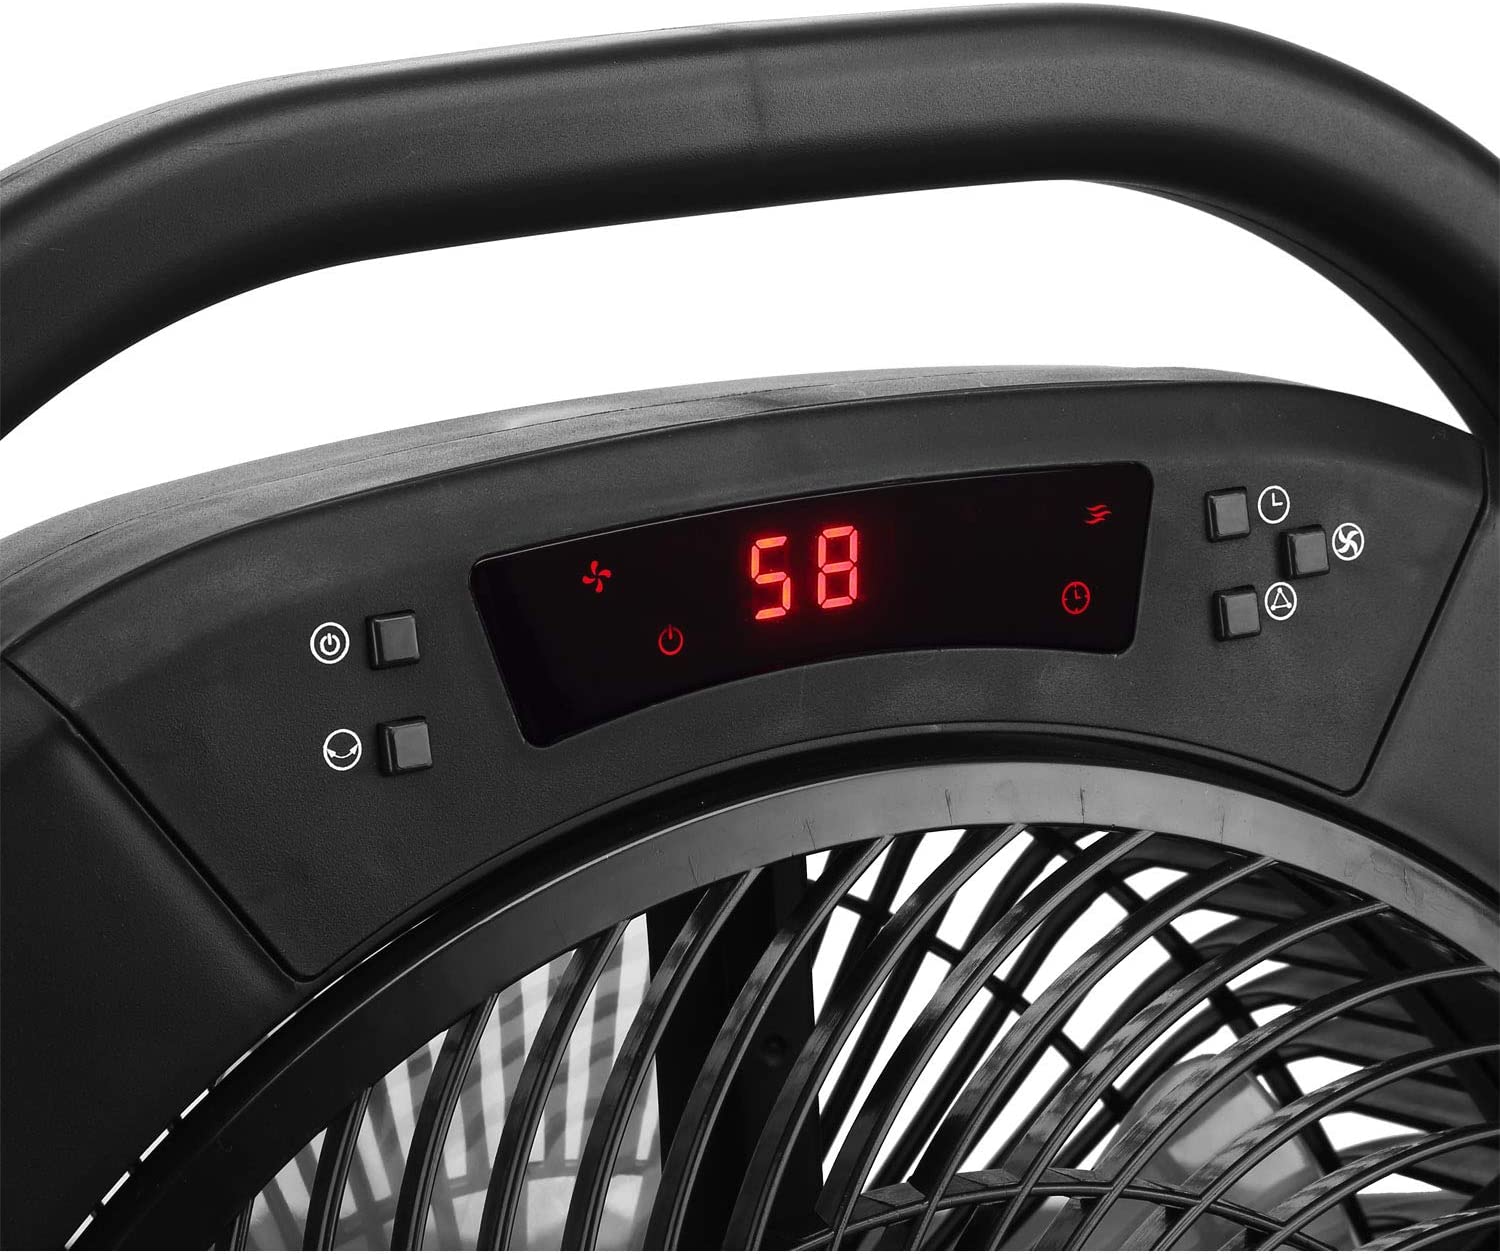 SKU: LS-EF006 - 29 Oscillating Bladeless Fan with Humidifiers